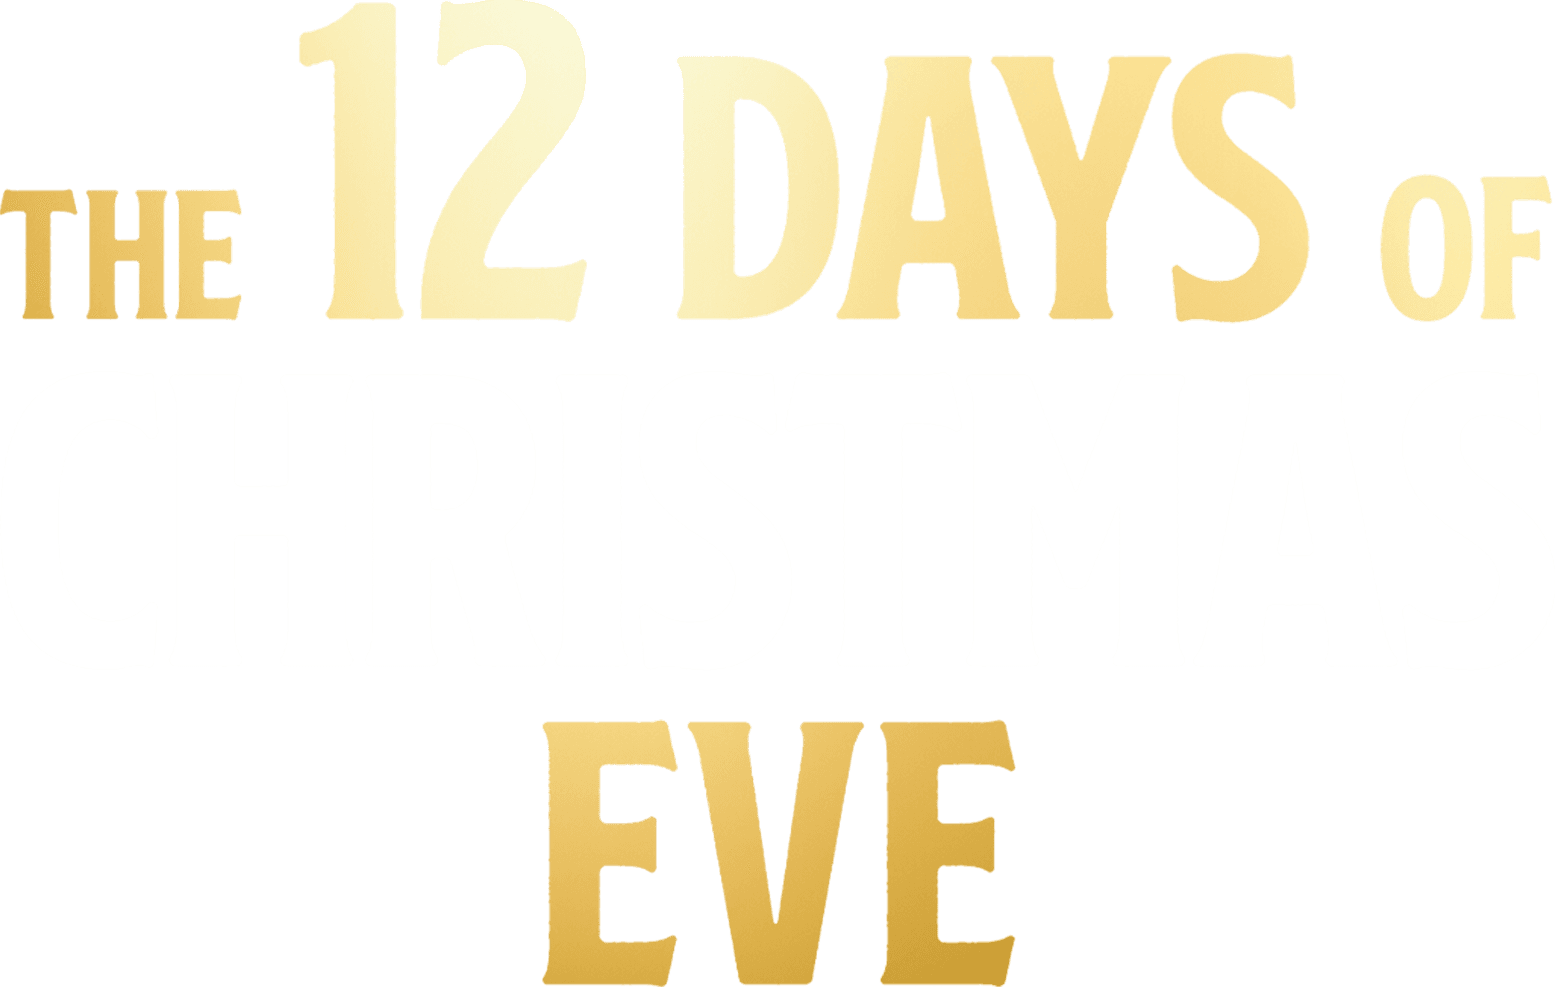 The 12 Days of Christmas Eve logo